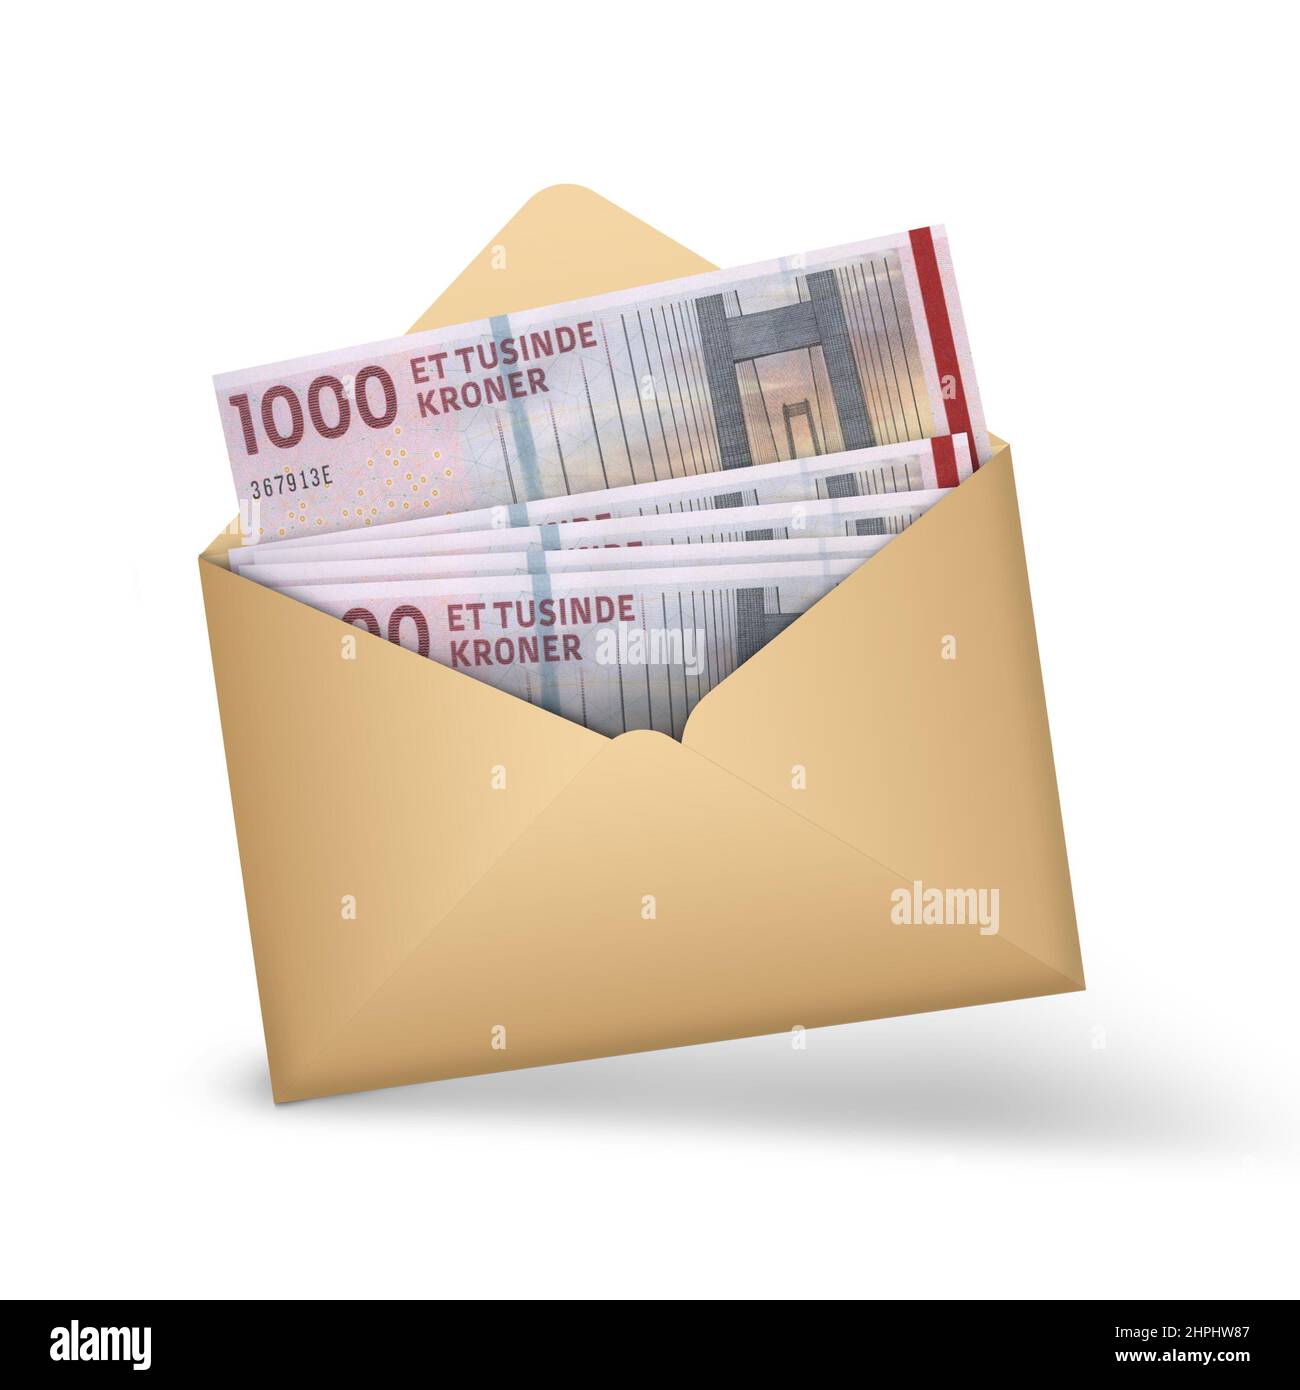 1000 Danish krone notes inside an open brown envelope. 3D illustration of money in an open envelope Stock Photo